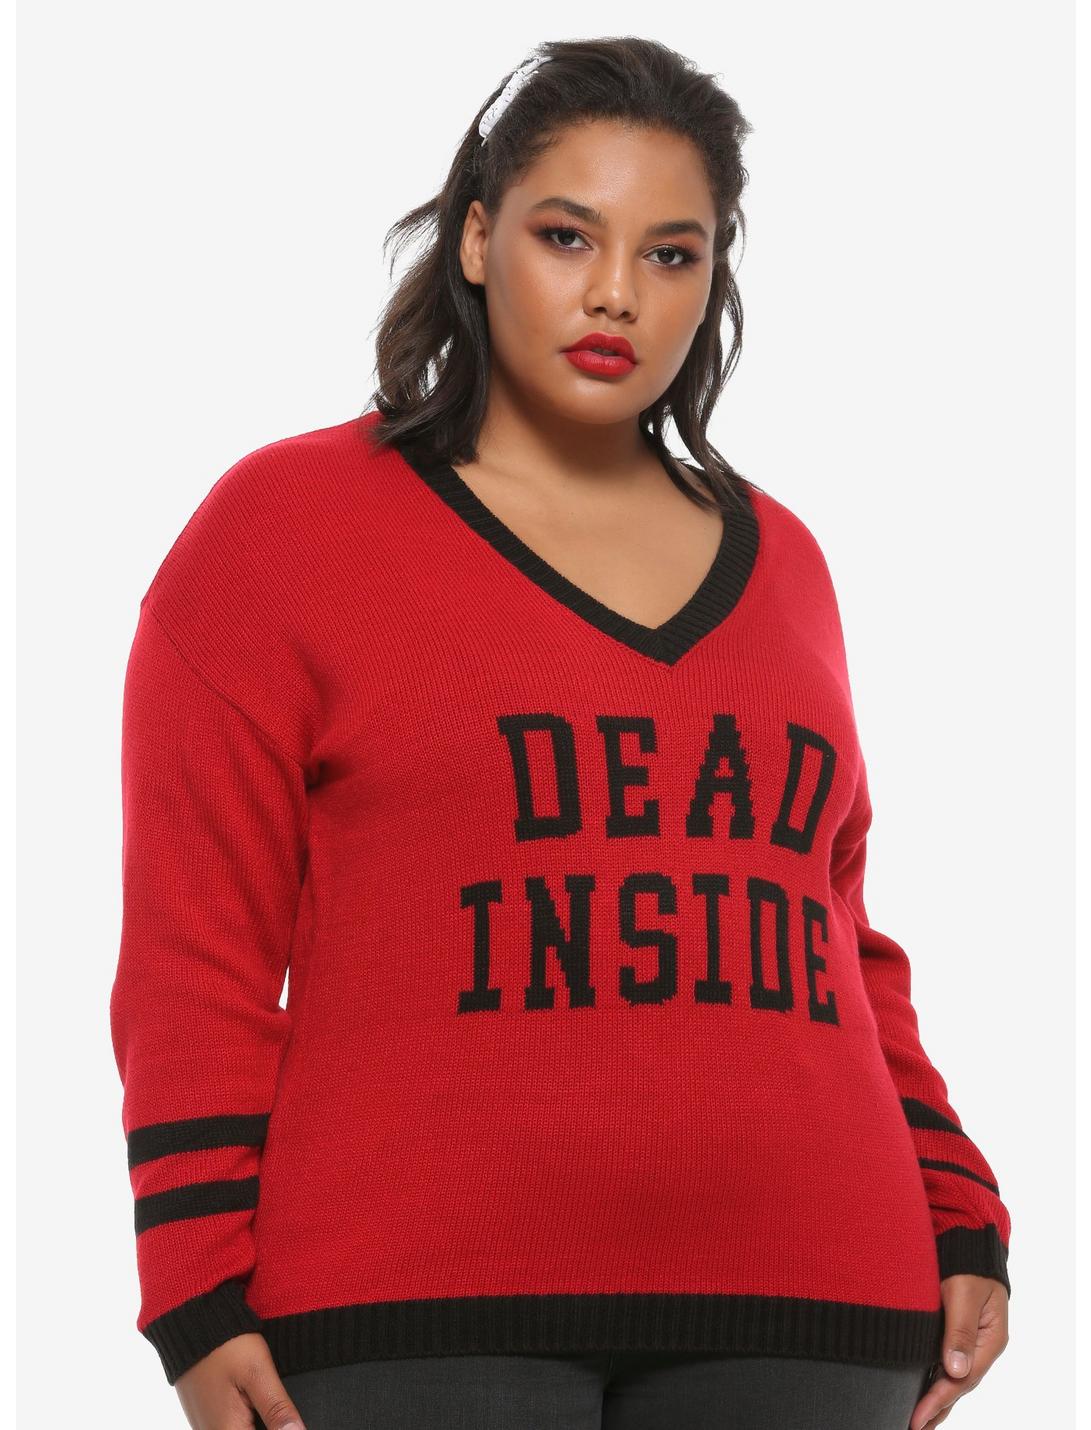 Dead Inside Girls Sweater Plus Size | Hot Topic